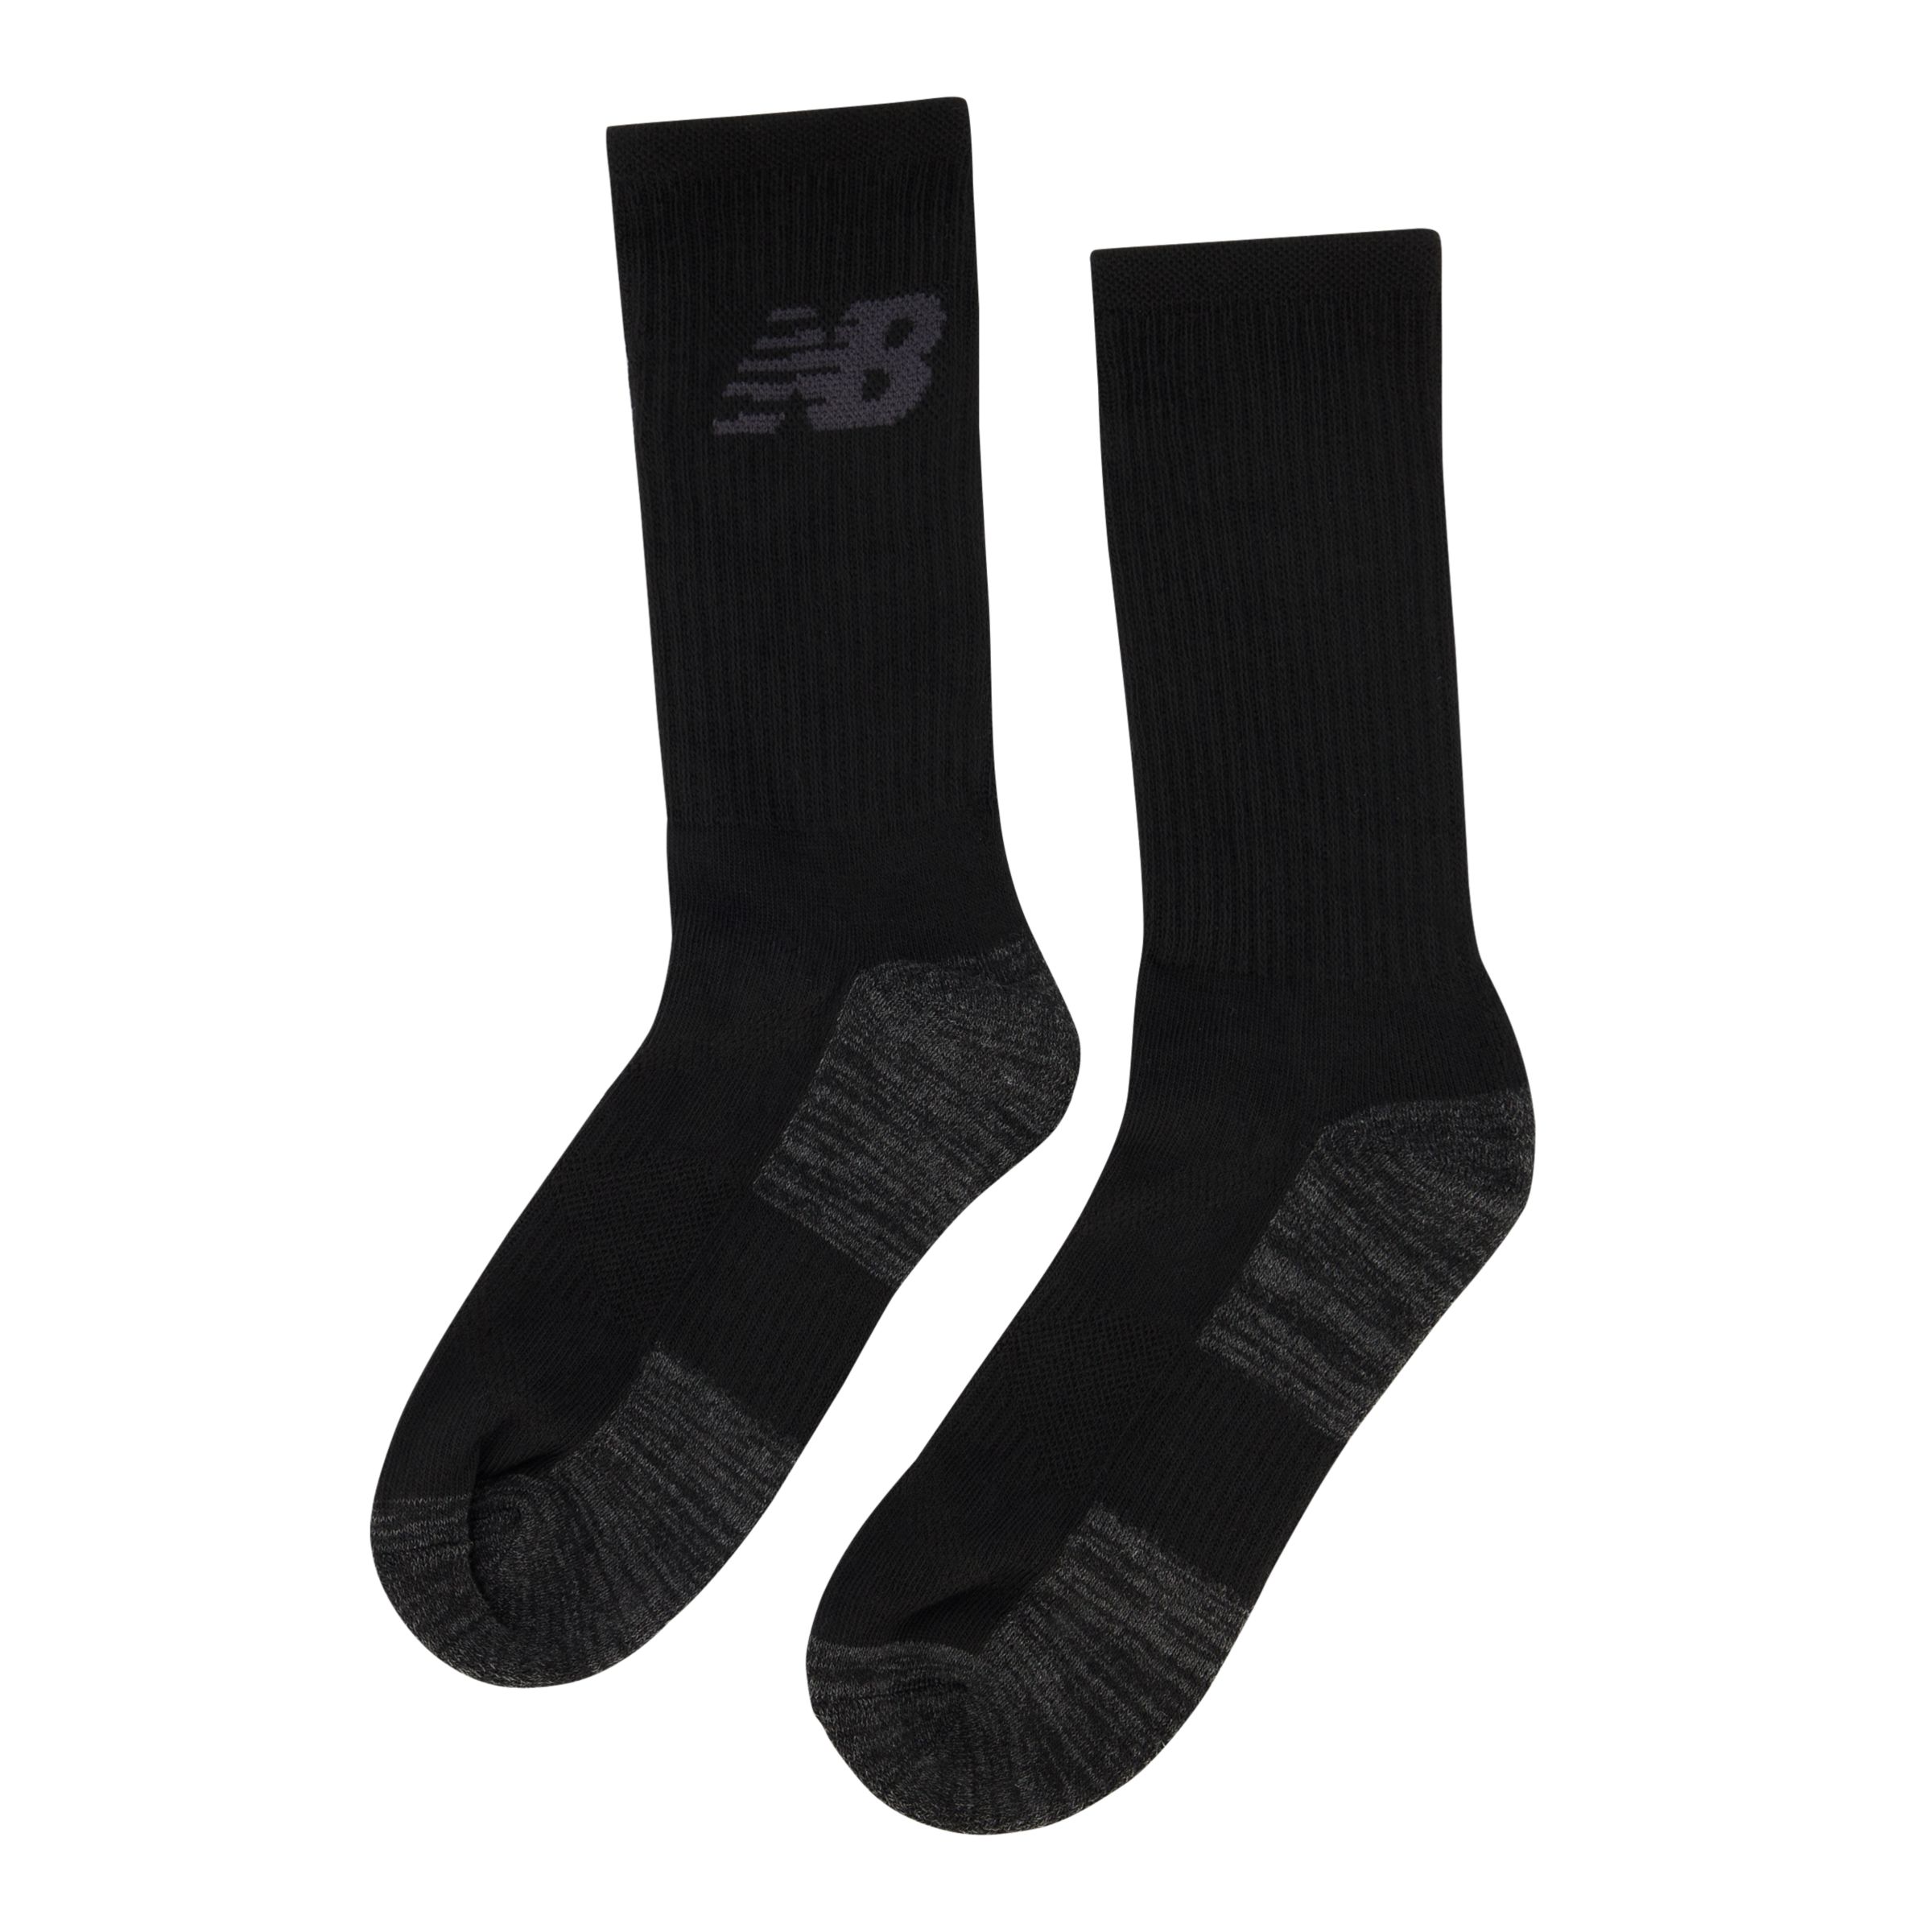 Cushioned Crew Socks 6 Pack - New Balance